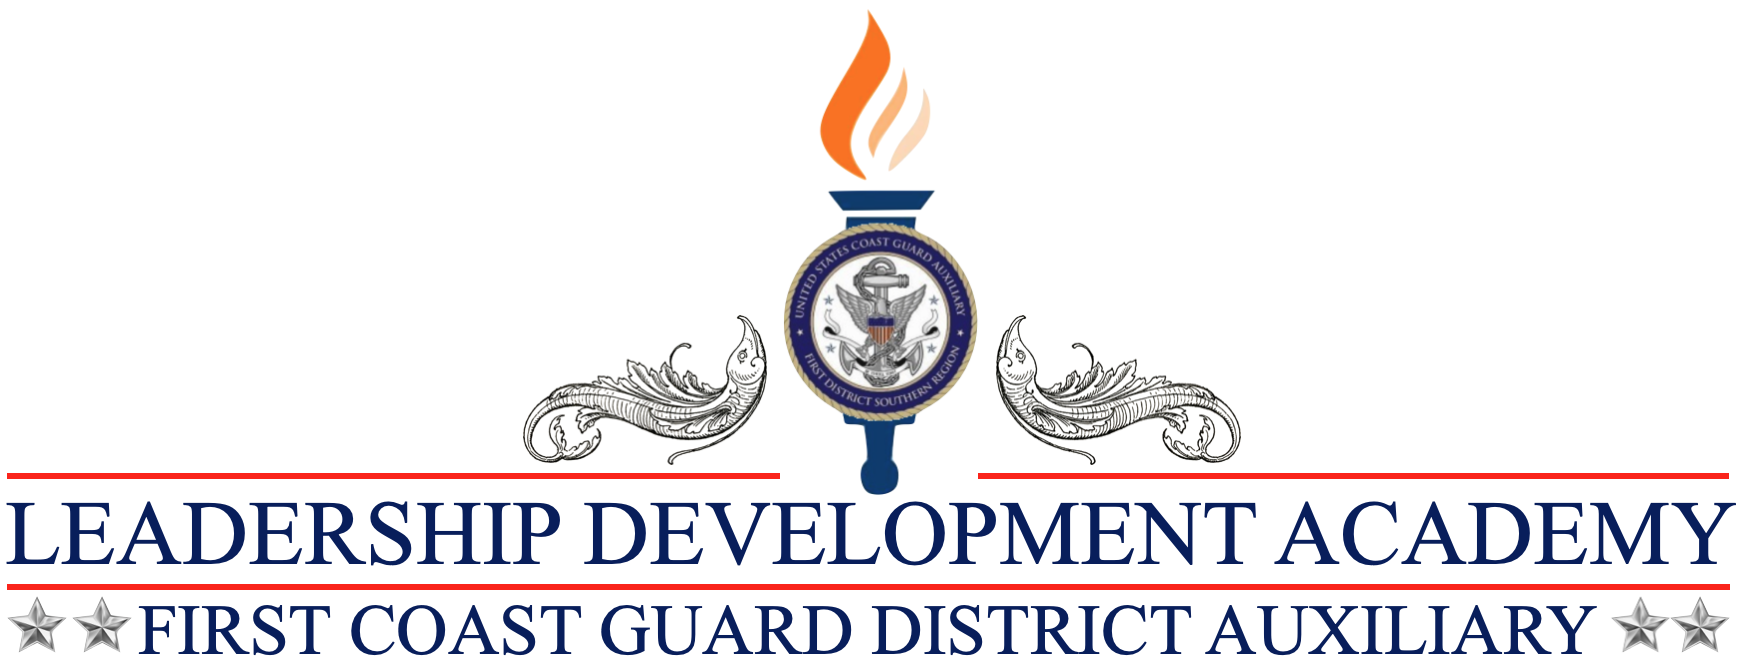 Leadership Development Academy Banner